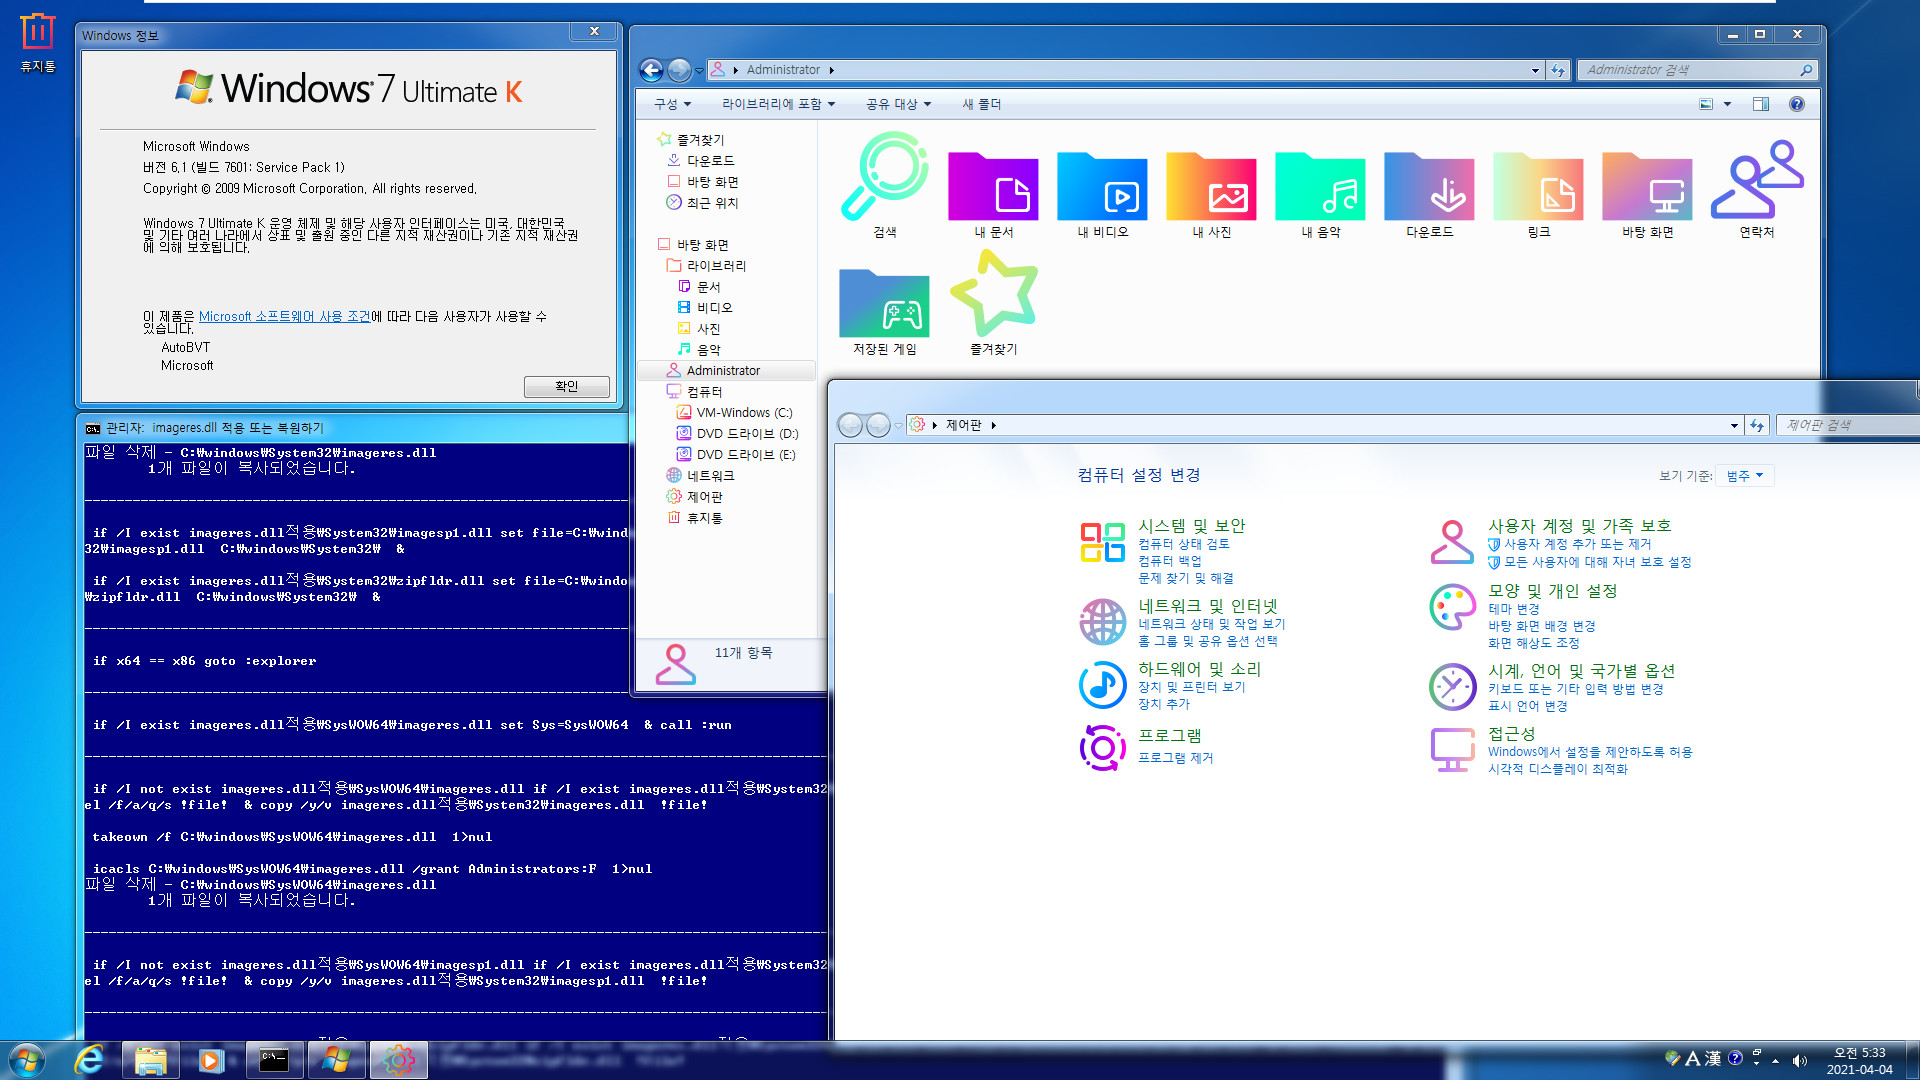 imageres.dll 윈도우 10 버전 1809용 파일이고 윈도우 7 라이브러리 안에 폴더 아이콘들이 정상 표시되기 때문에 윈도우 7 종료와 부팅 배경화면만 정상 표시되도록 7 원본 imageres.dll을 합쳐서 테스트 2021-04-04_053320.jpg